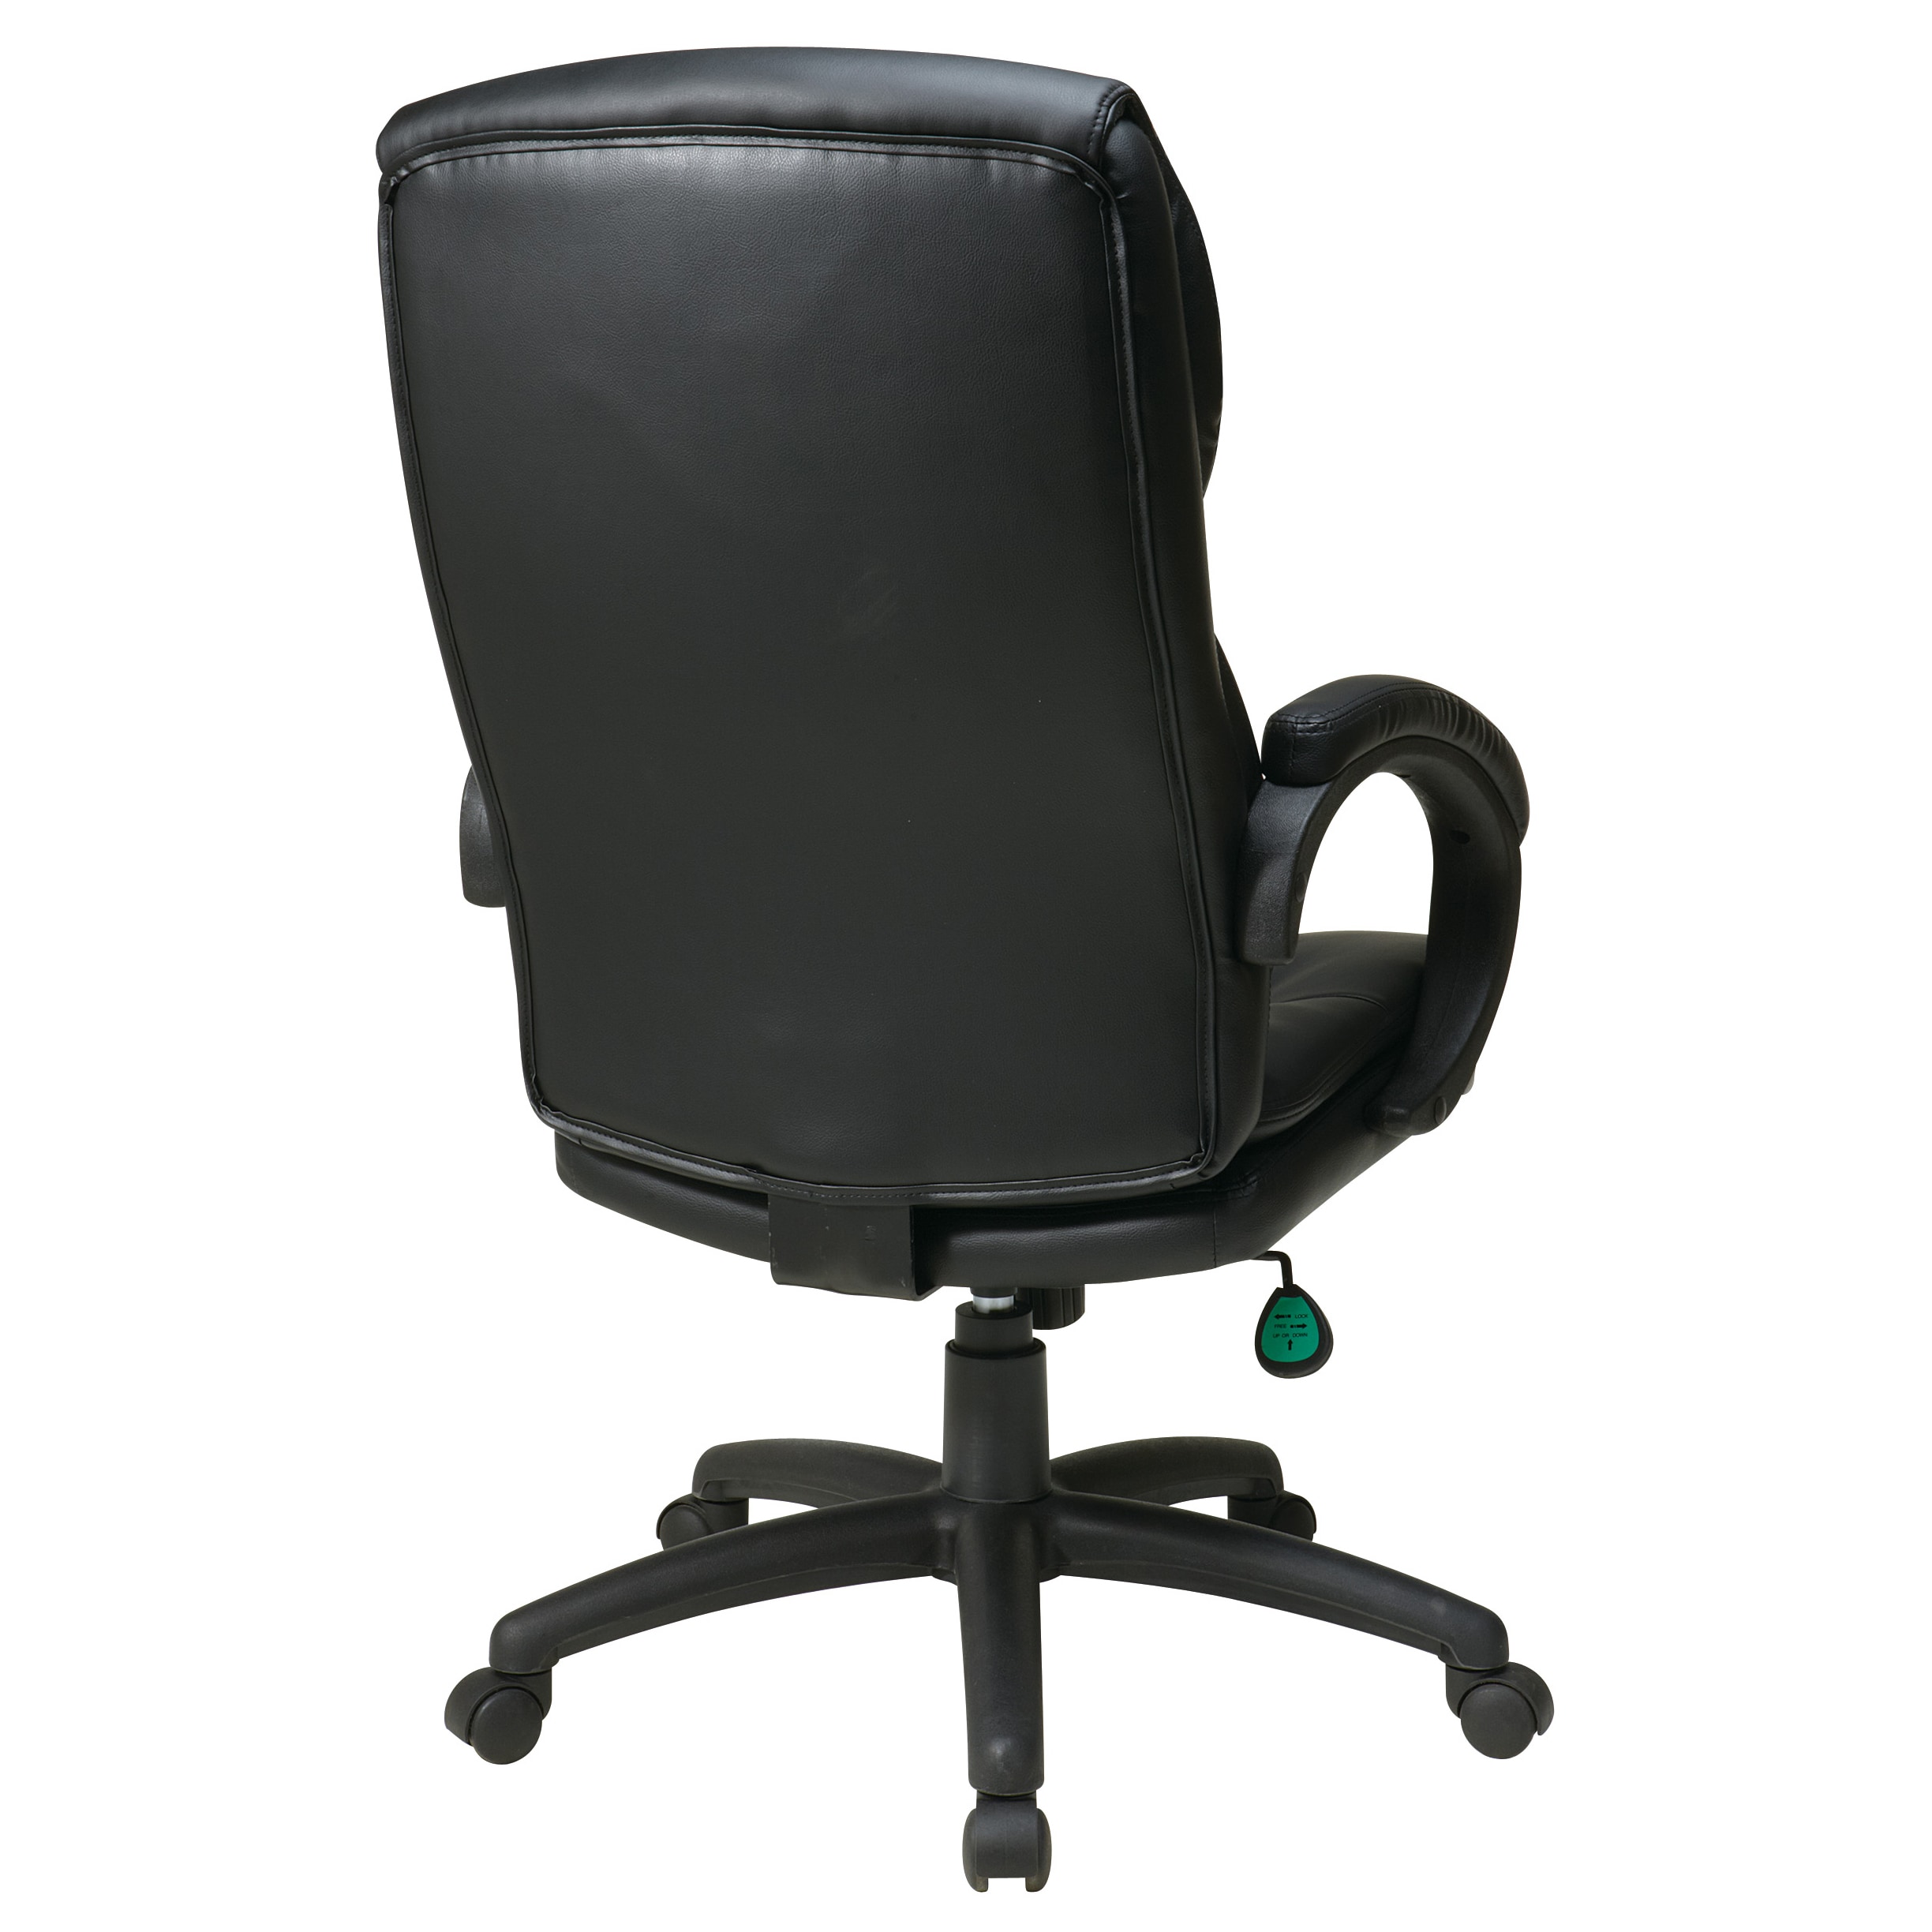 Black High Black Leather Executive Office Chair - Deeply Padded - Washington